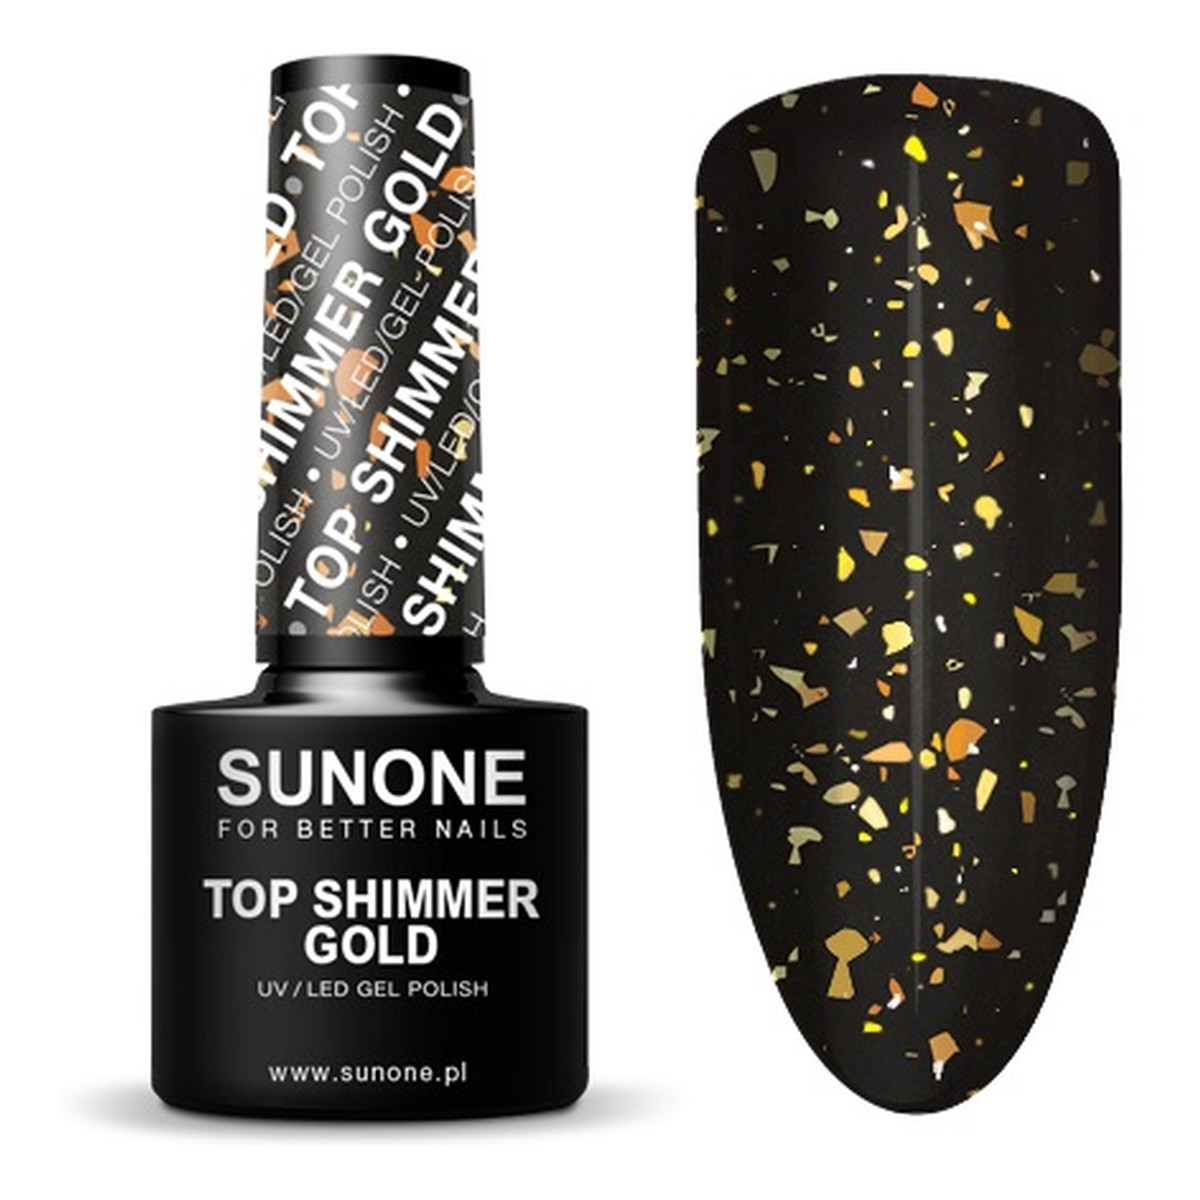 Sunone Top shimmer gold top hybrydowy 5g